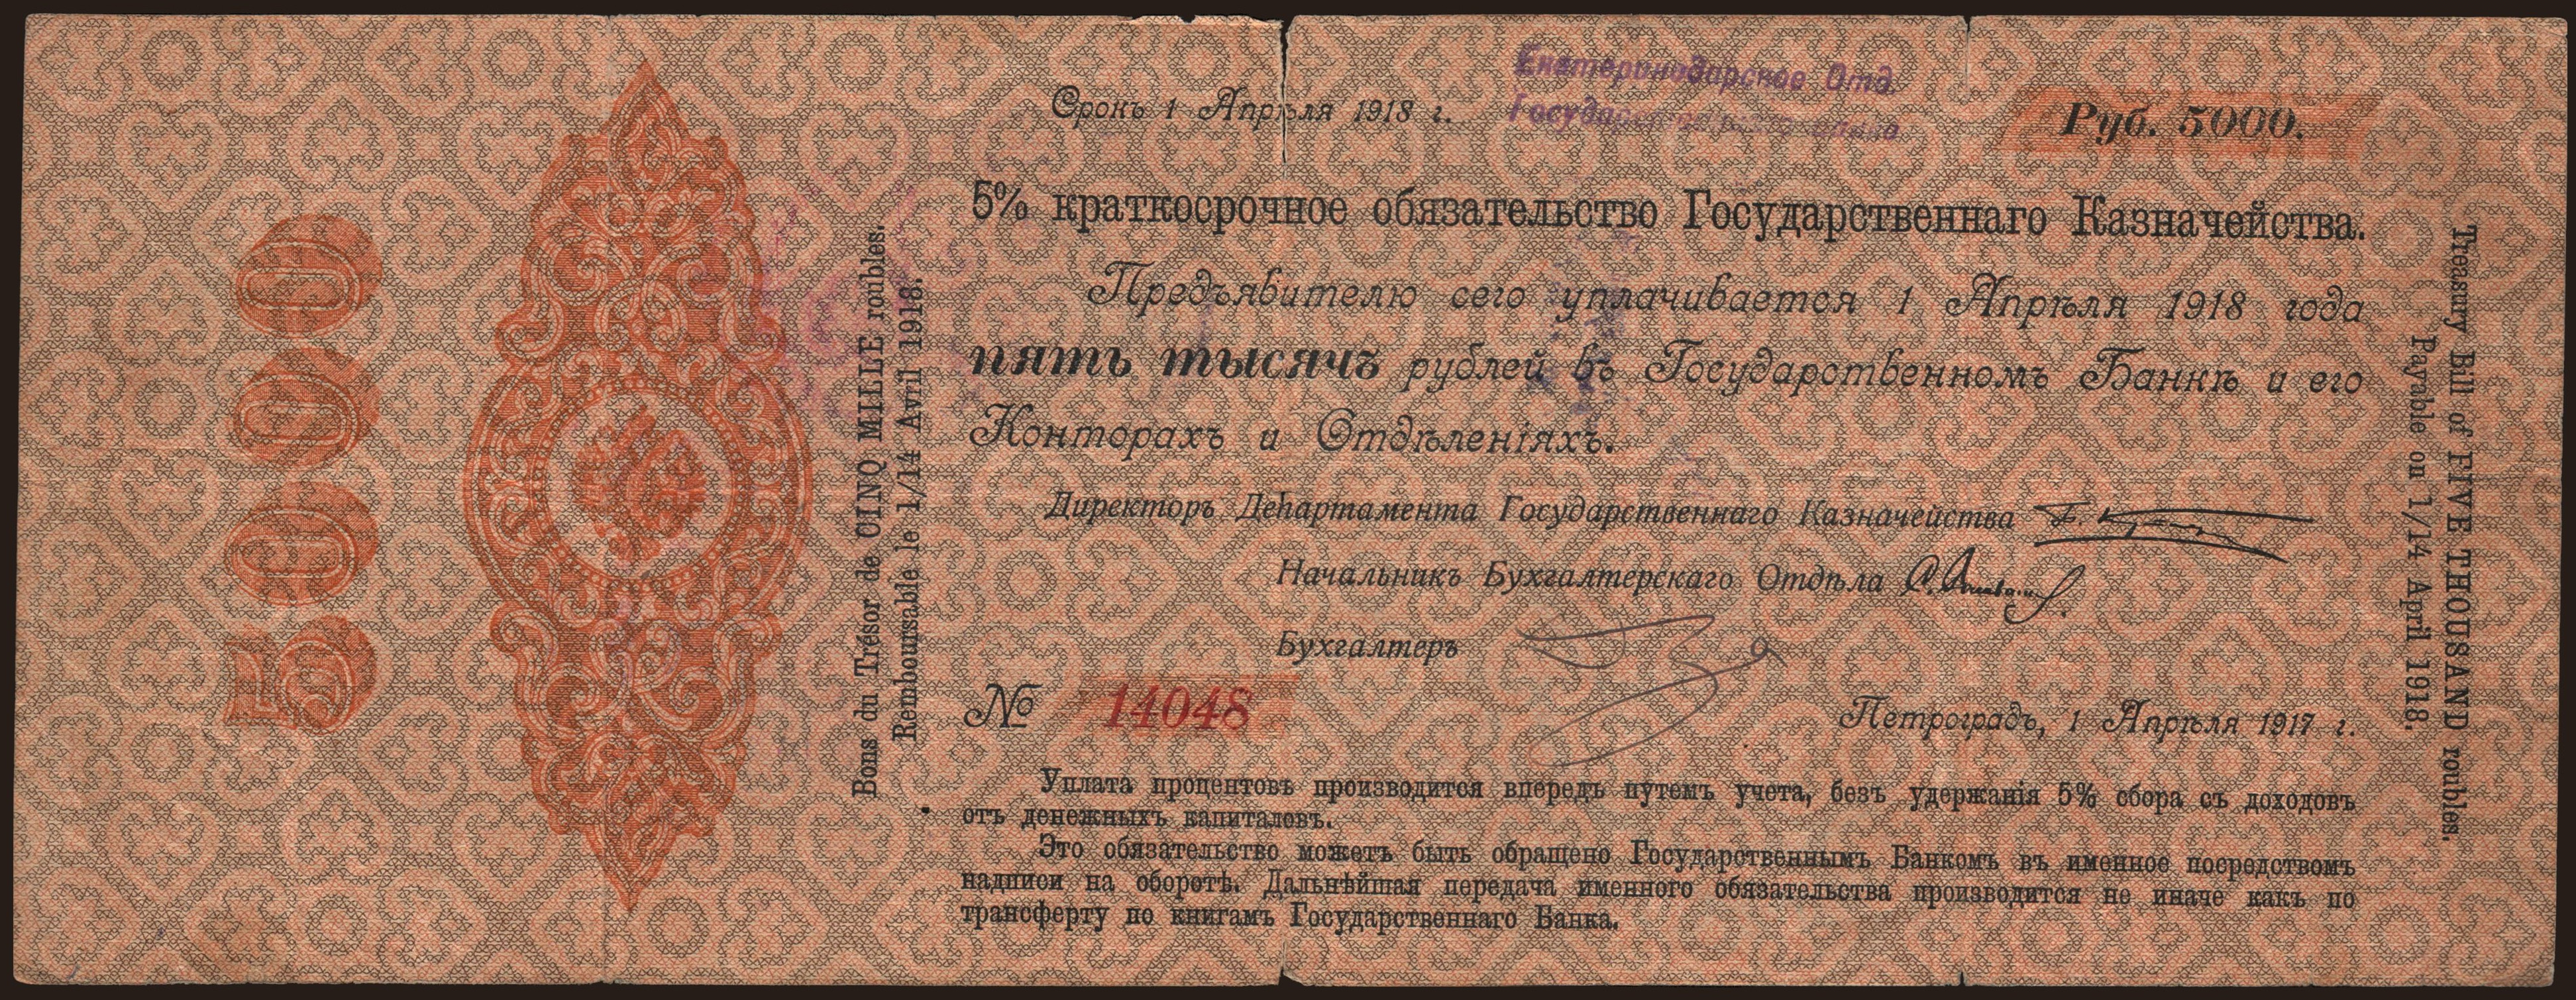 5000 rubel, 1917